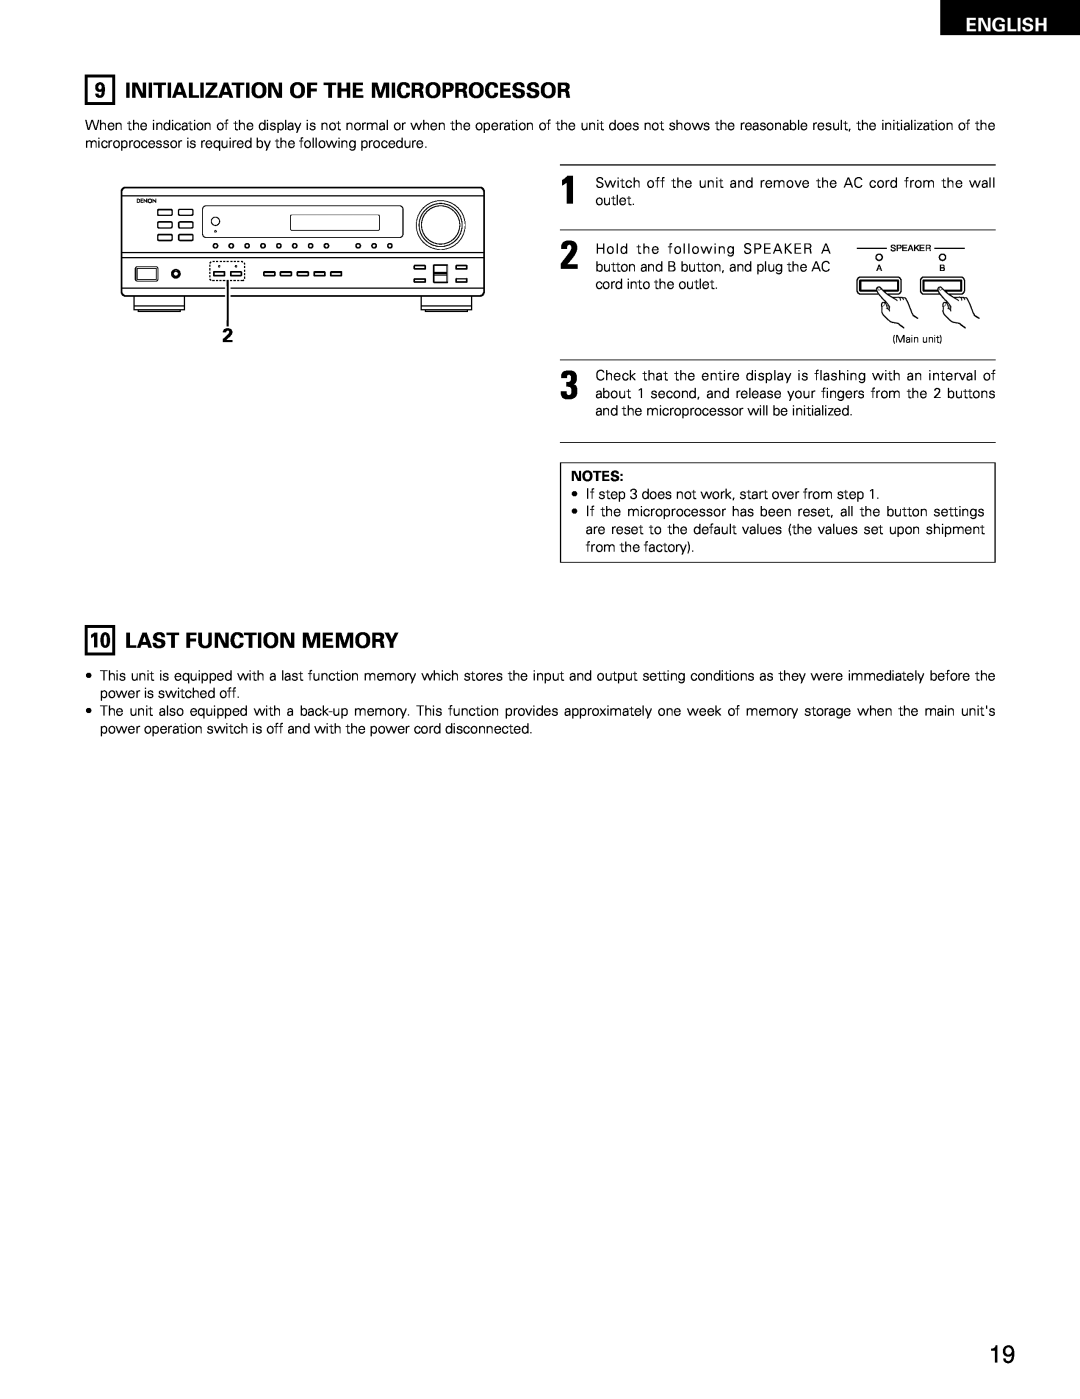 Denon DRA-295 manual Initialization Of The Microprocessor, 10LAST FUNCTION MEMORY, English 